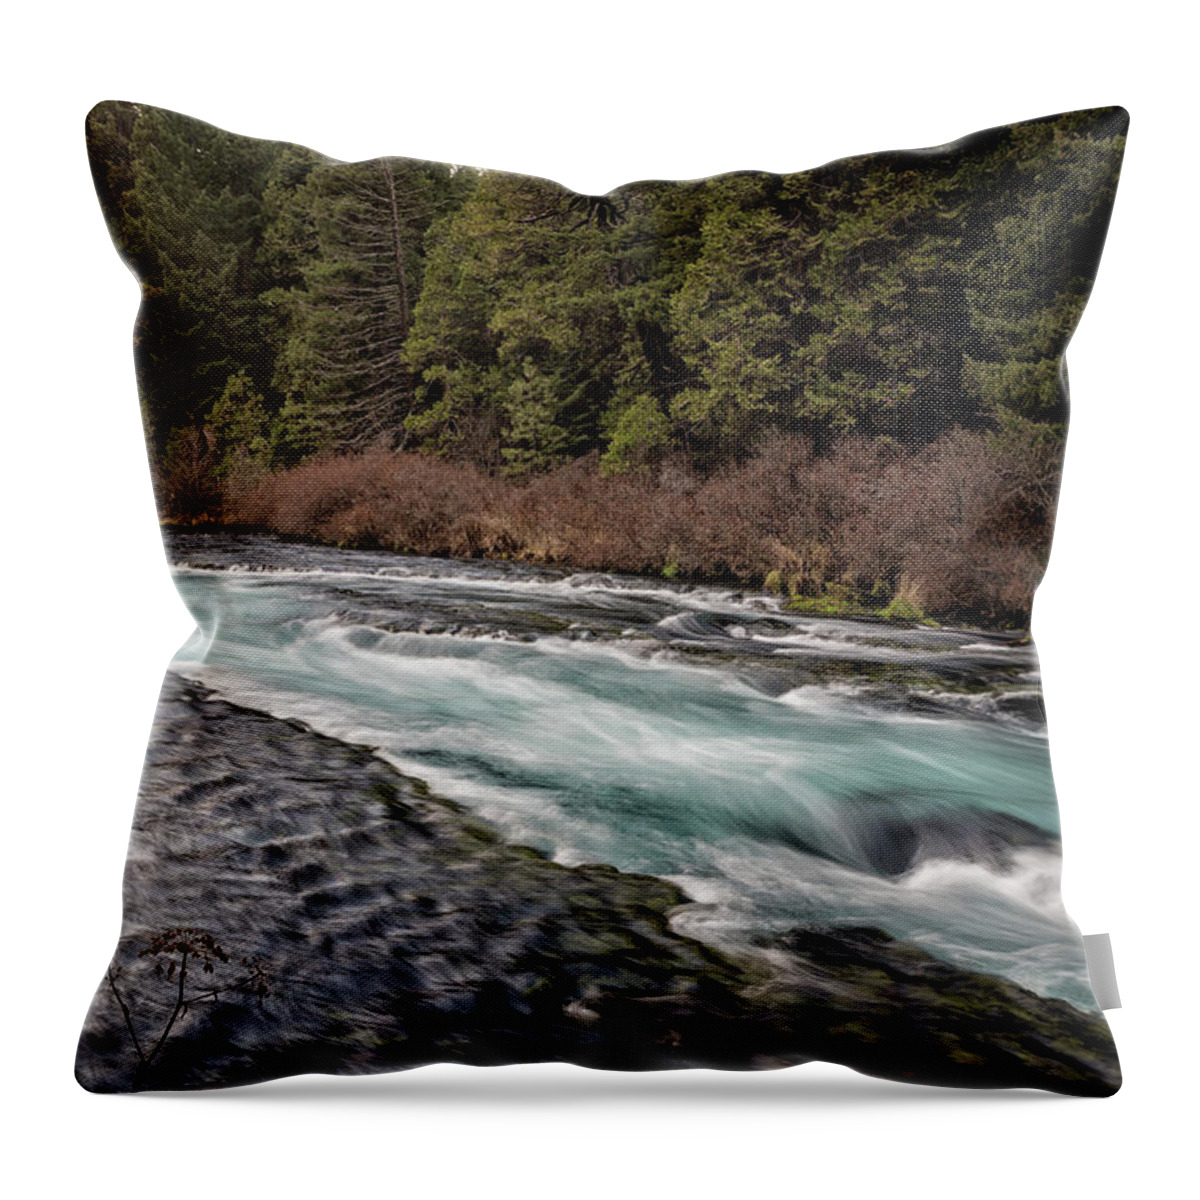 Metolius River Throw Pillow featuring the photograph Metolius River near Wizard Falls by Belinda Greb